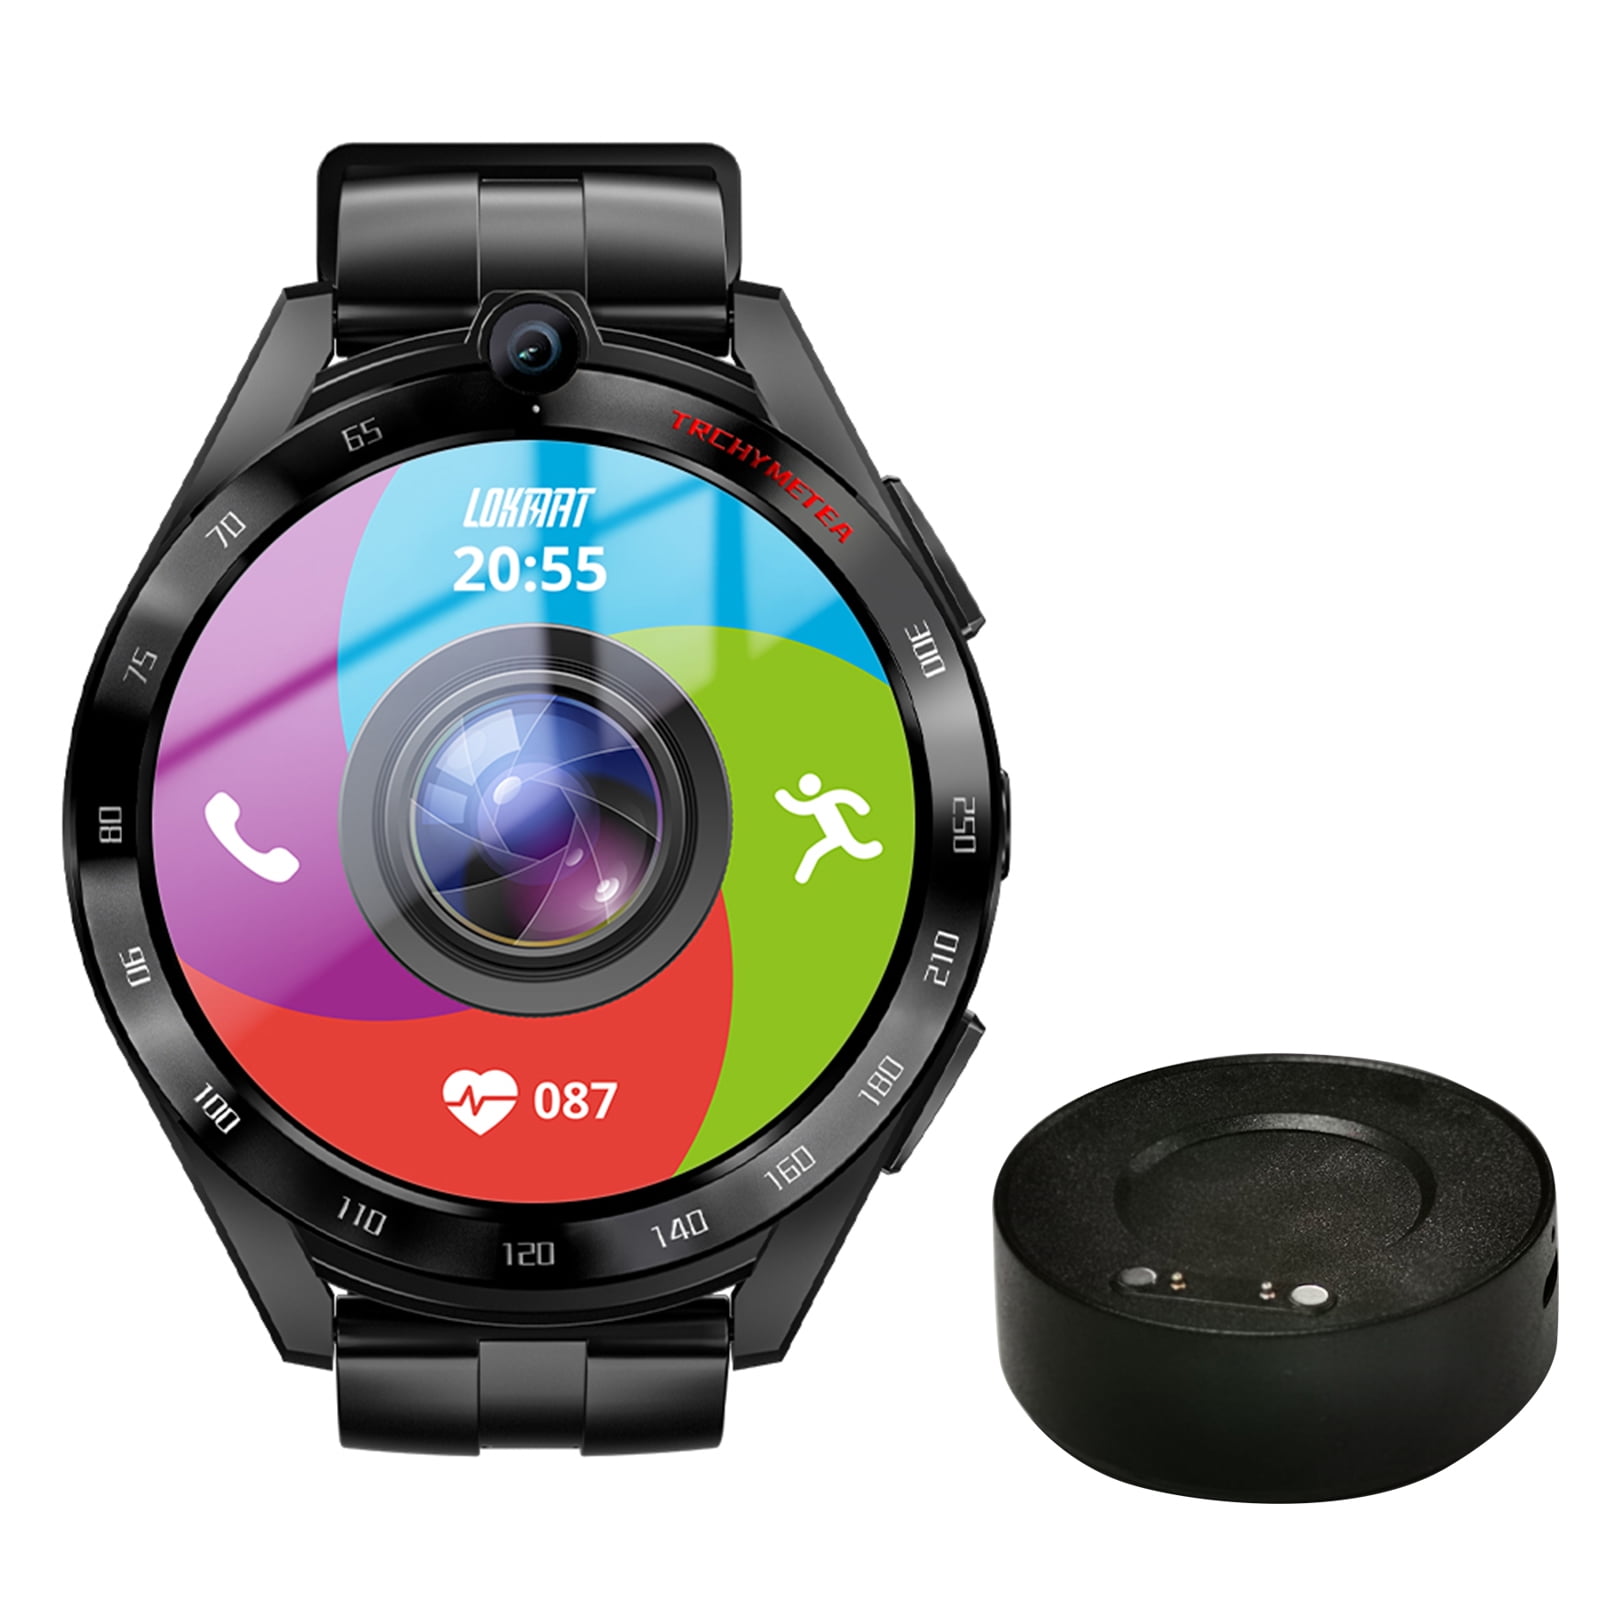 Huawei Smartwatch Price in Nepal - Buy Huawei Smartwatches Online